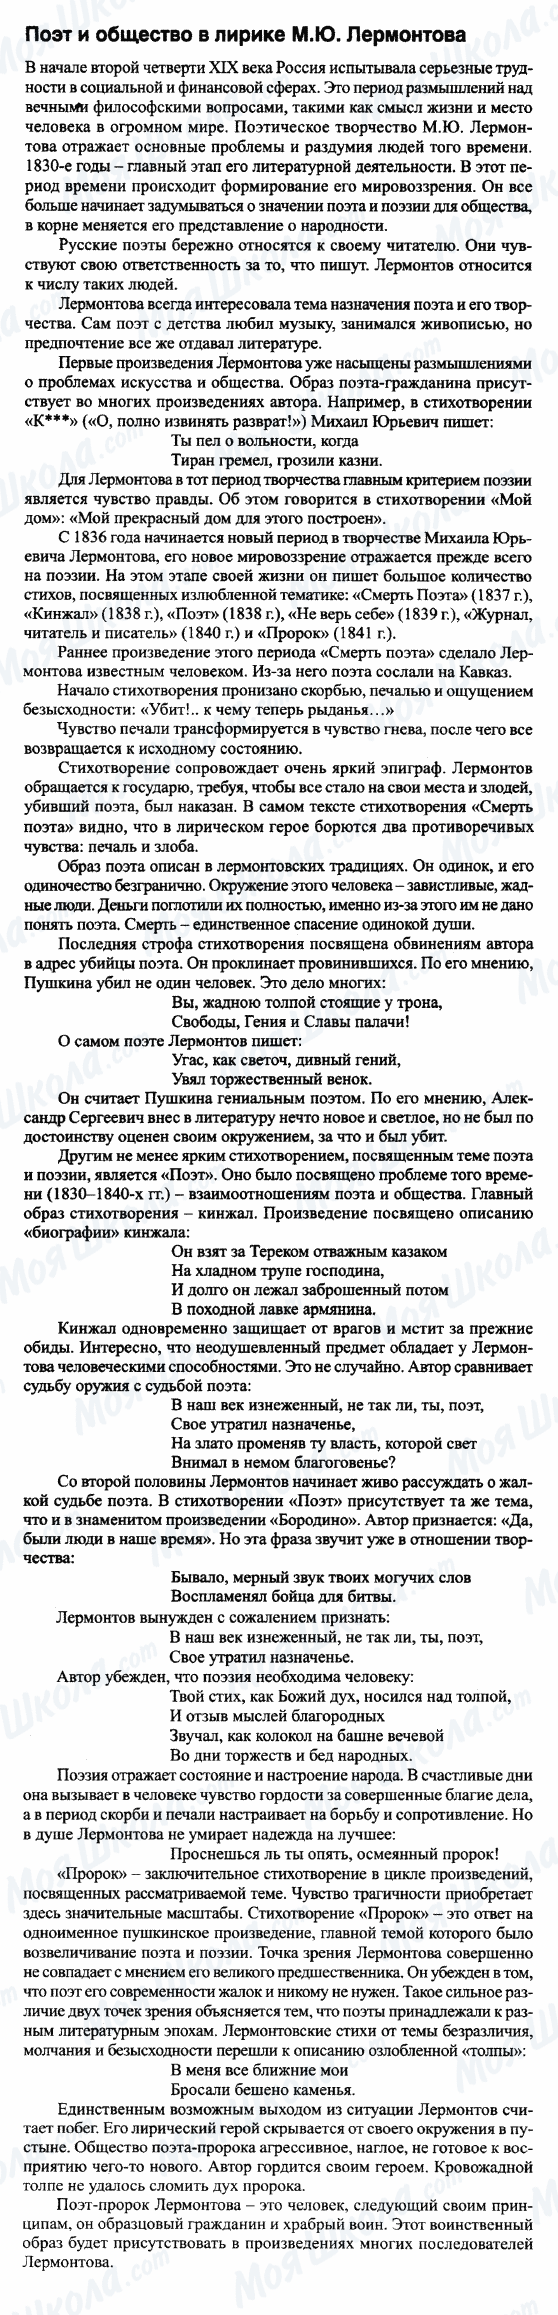 ГДЗ Російська література 9 клас сторінка Поет и общество в лирике Лермонтова